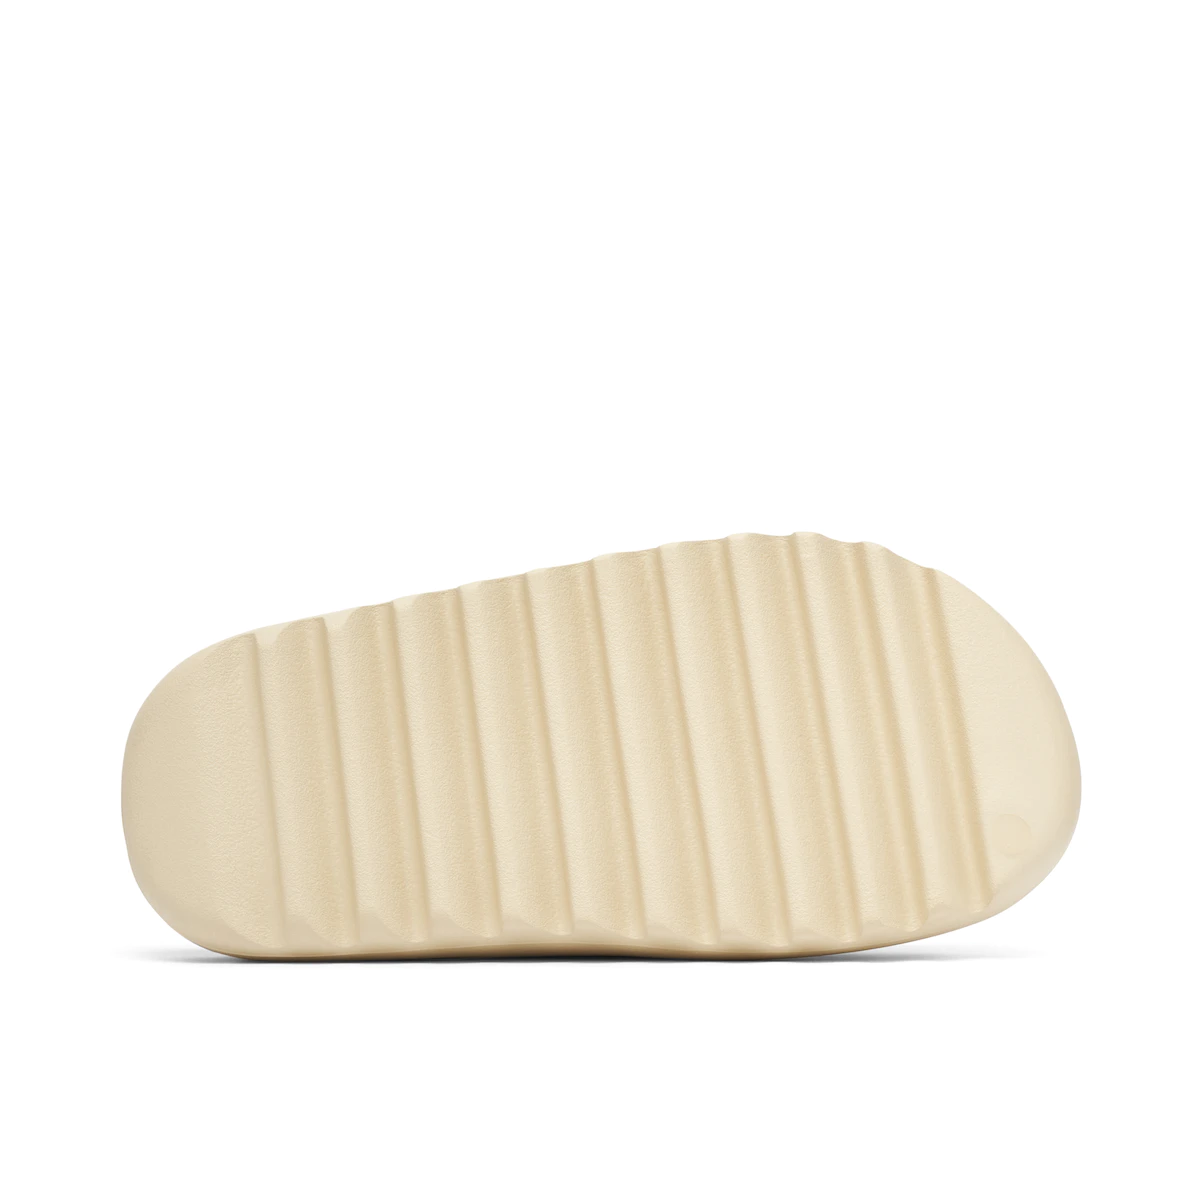 adidas Yeezy Slide Bone (2022) (Restock)